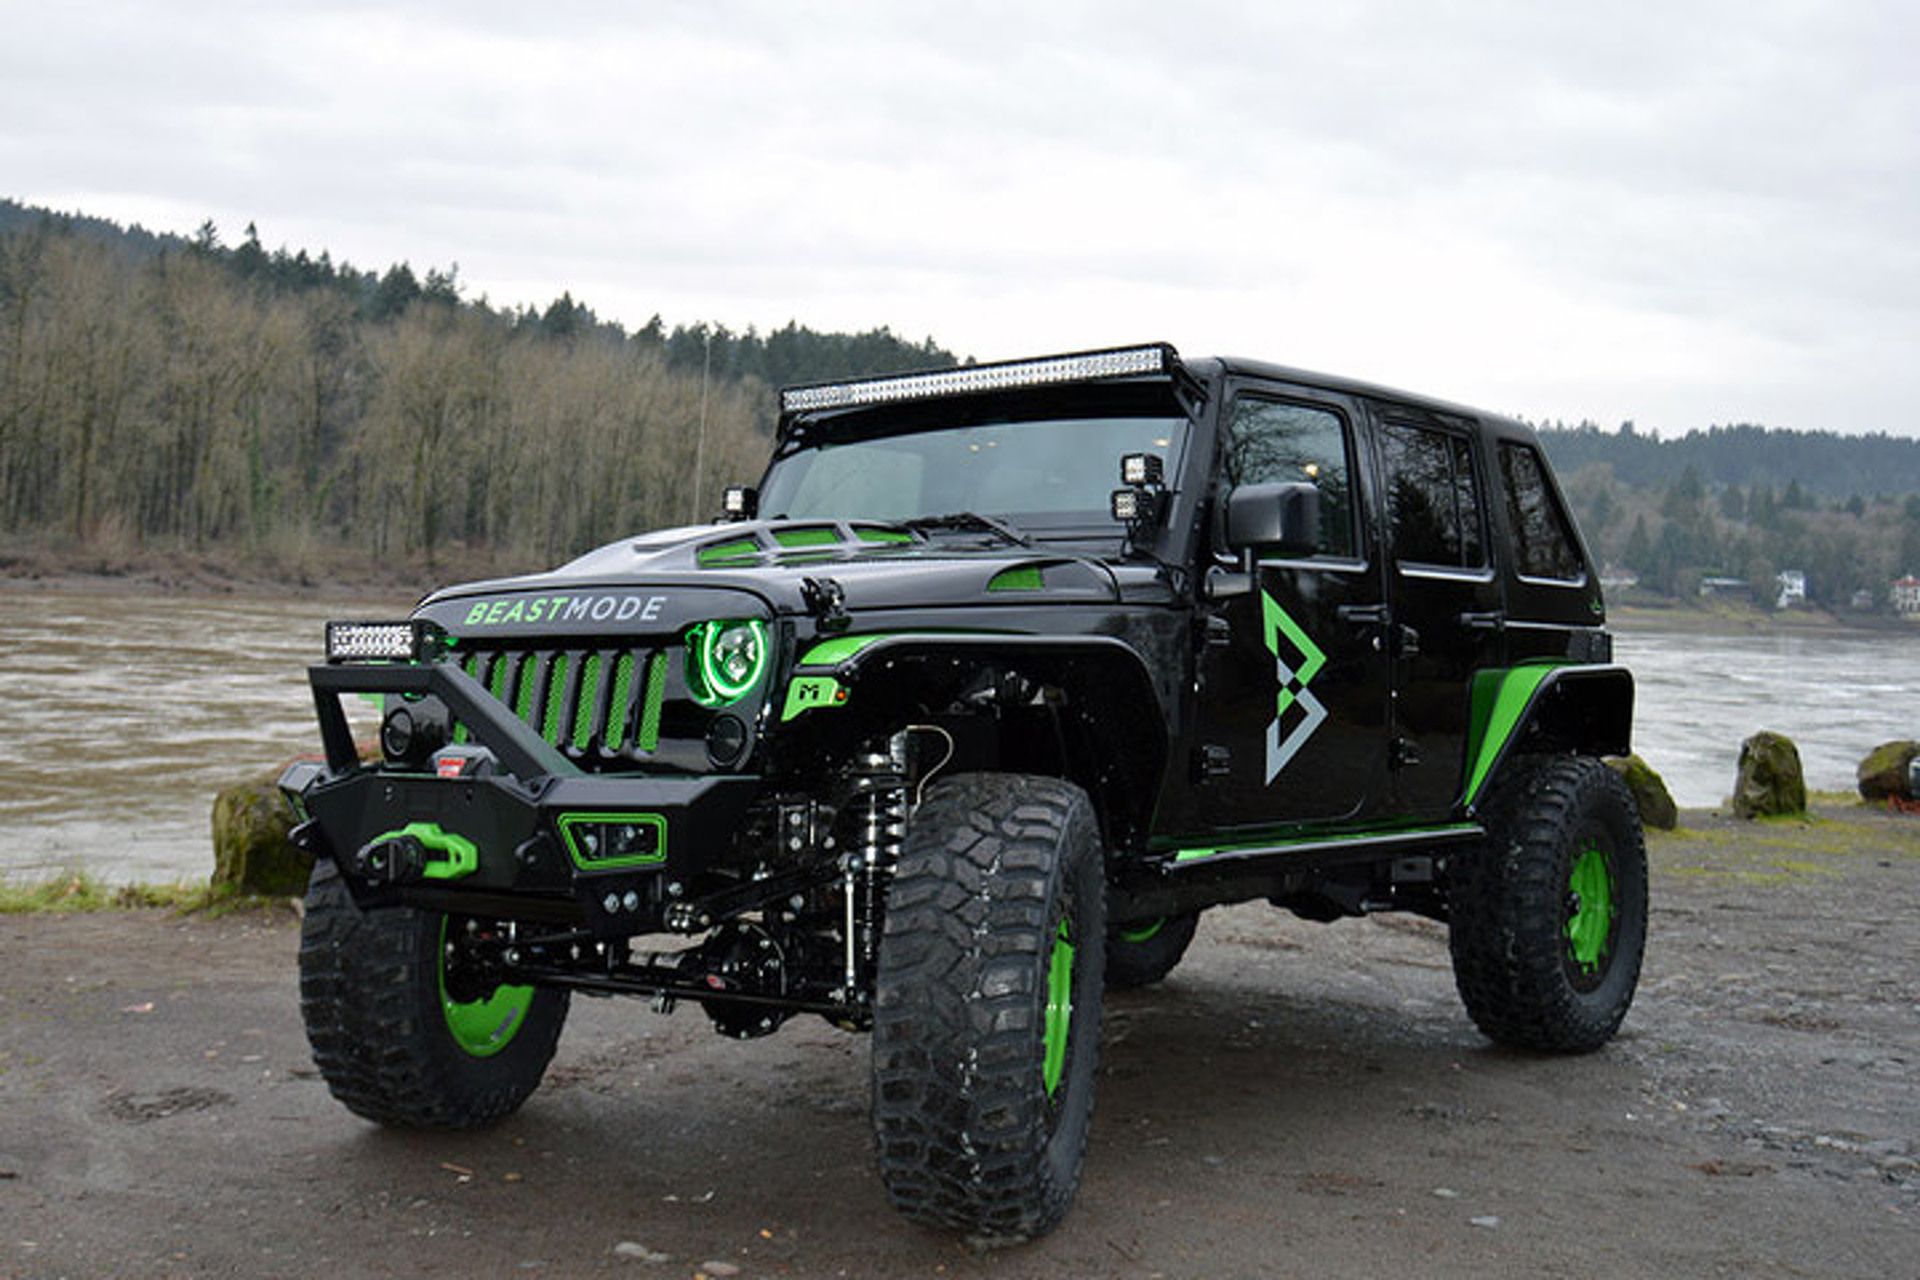 Marshawn Lynch's Black and Green Jeep wrangler